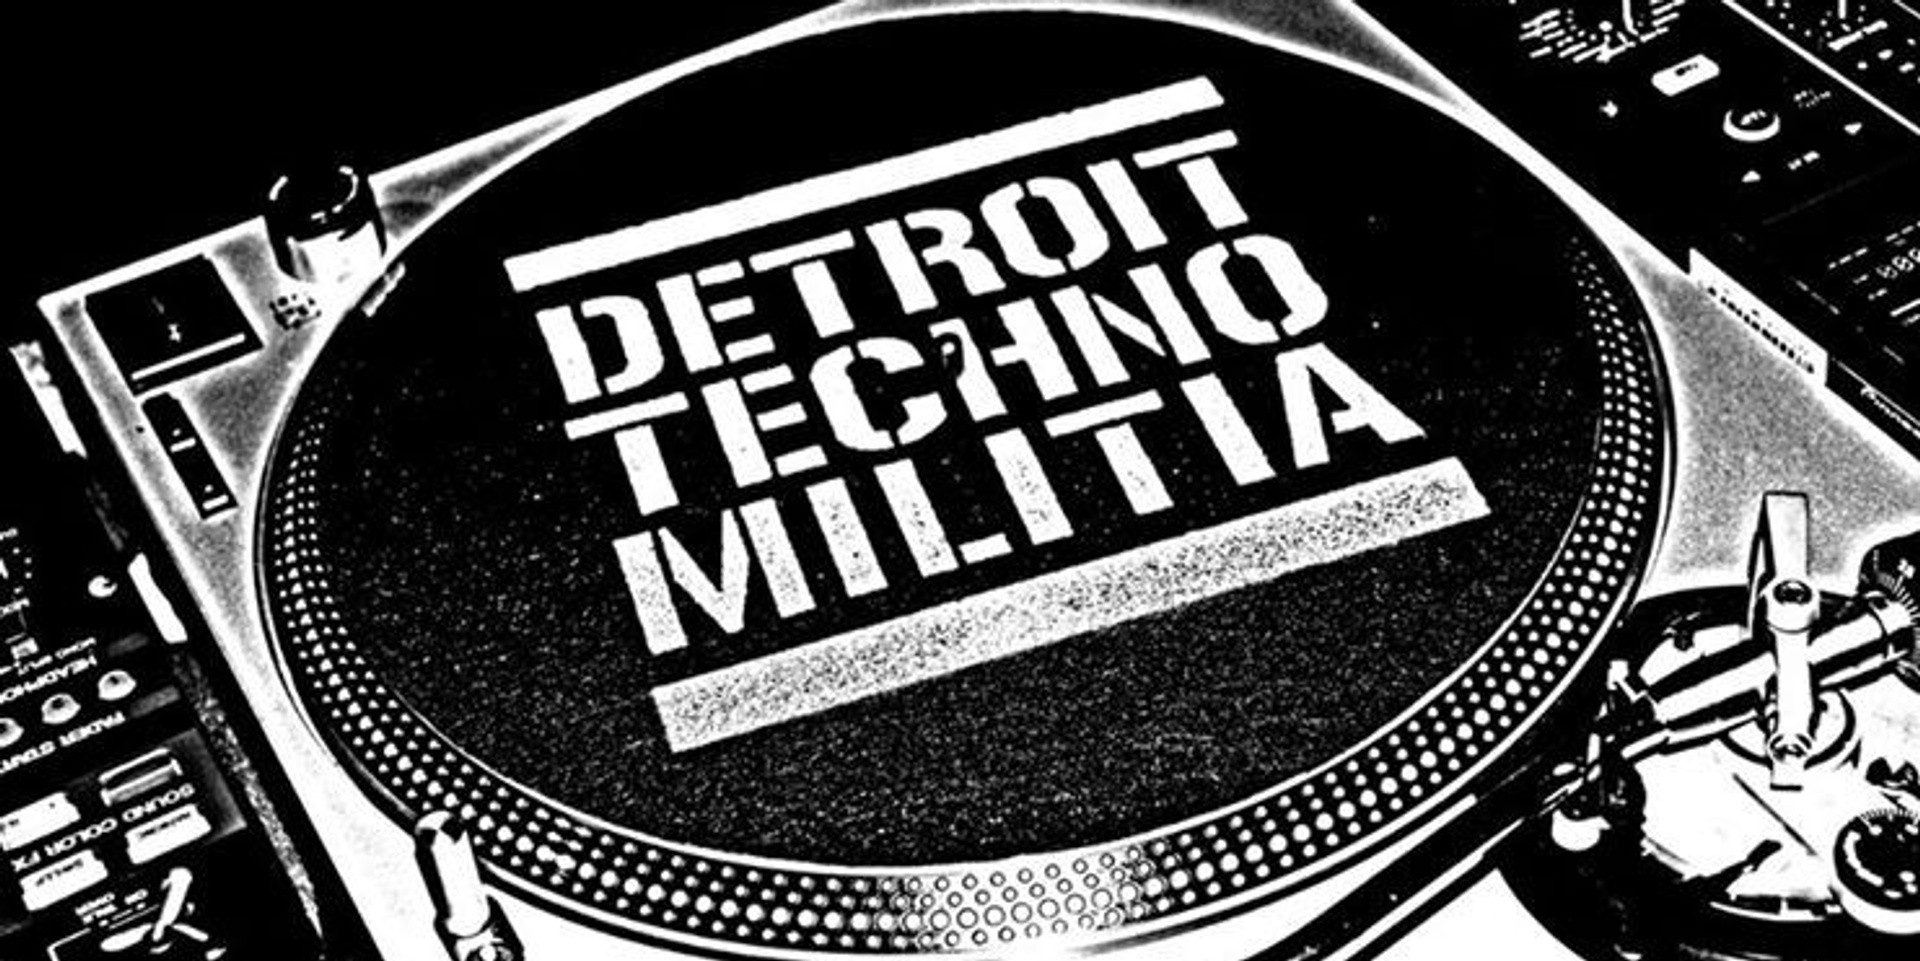 10 Indispensable Detroit Techno Records, according to Detroit Techno Militia